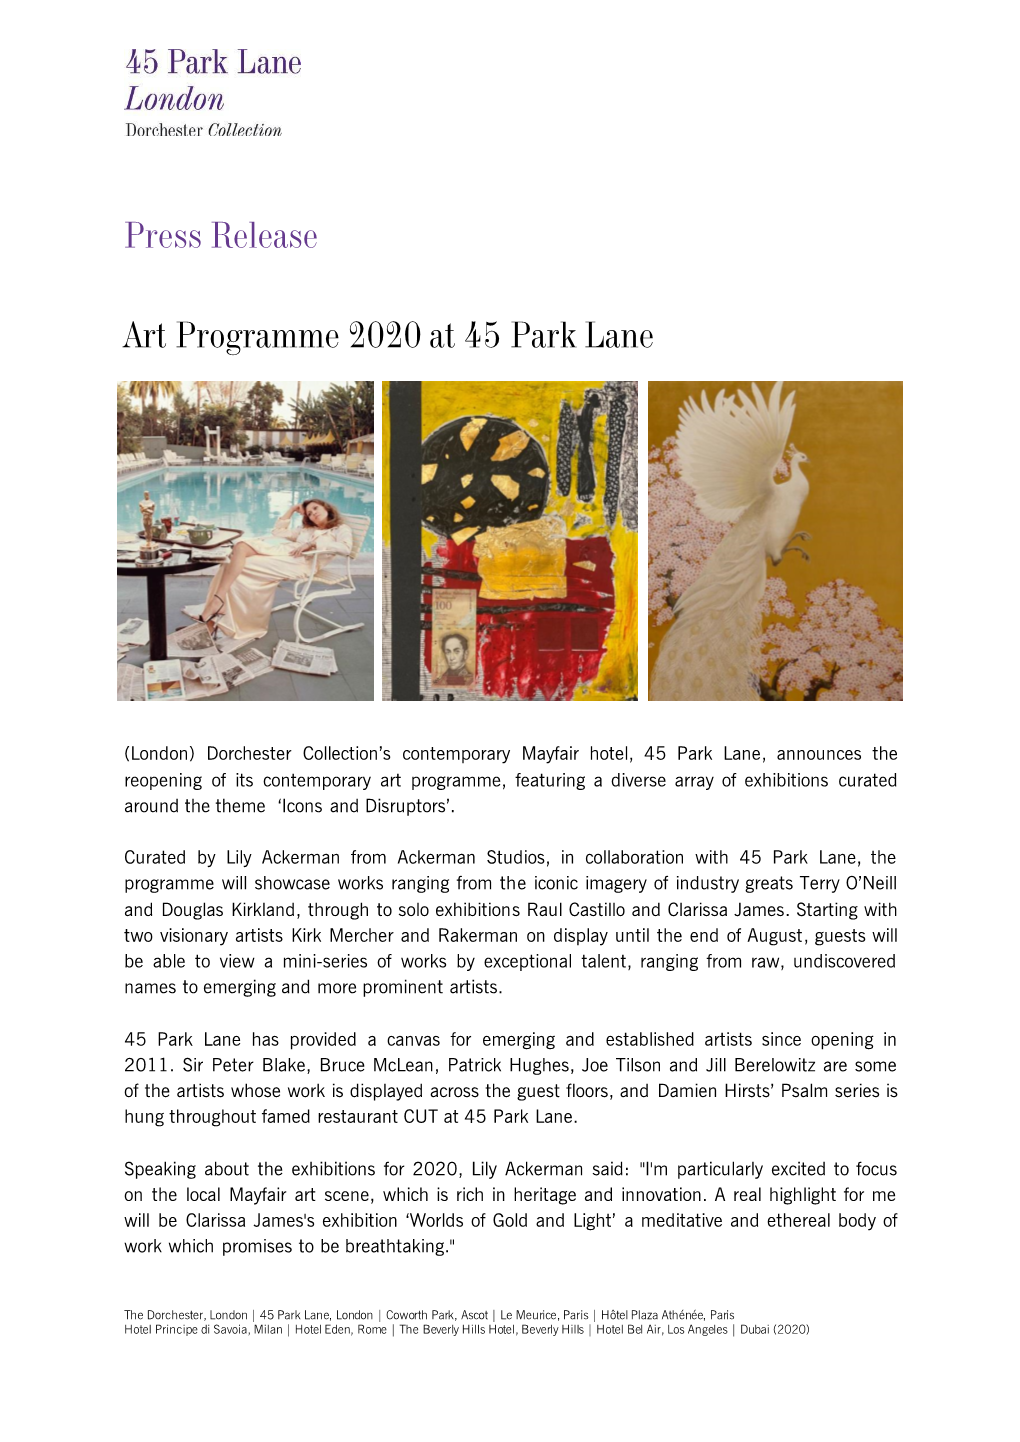 Art Programme 2020 at 45 Park Lane